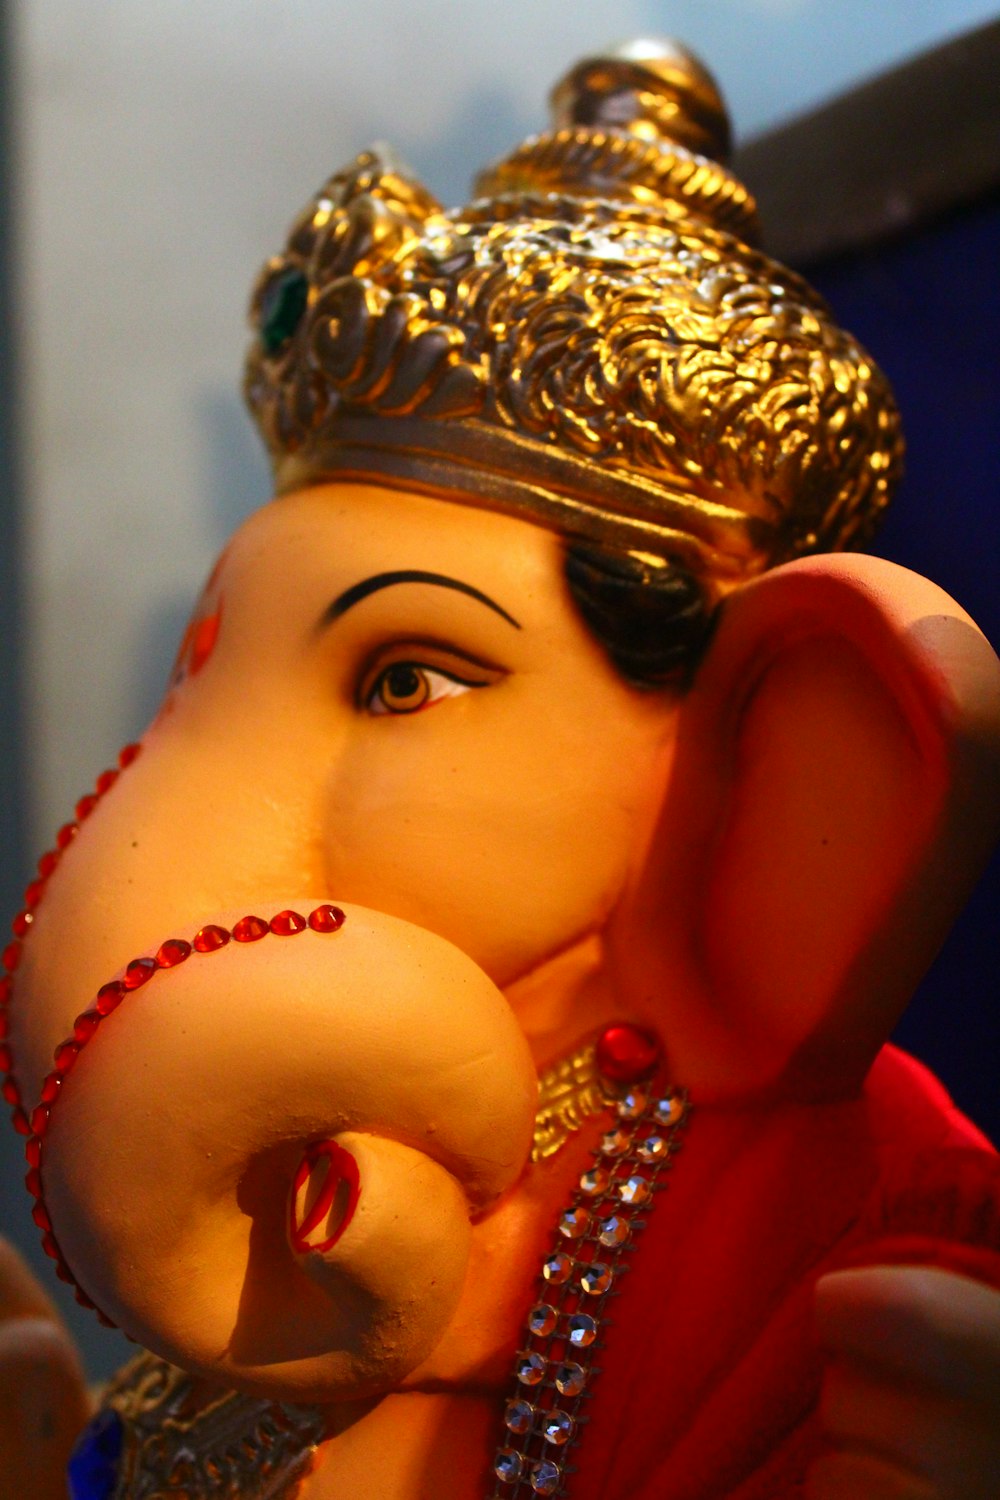 Lord Ganesha statue